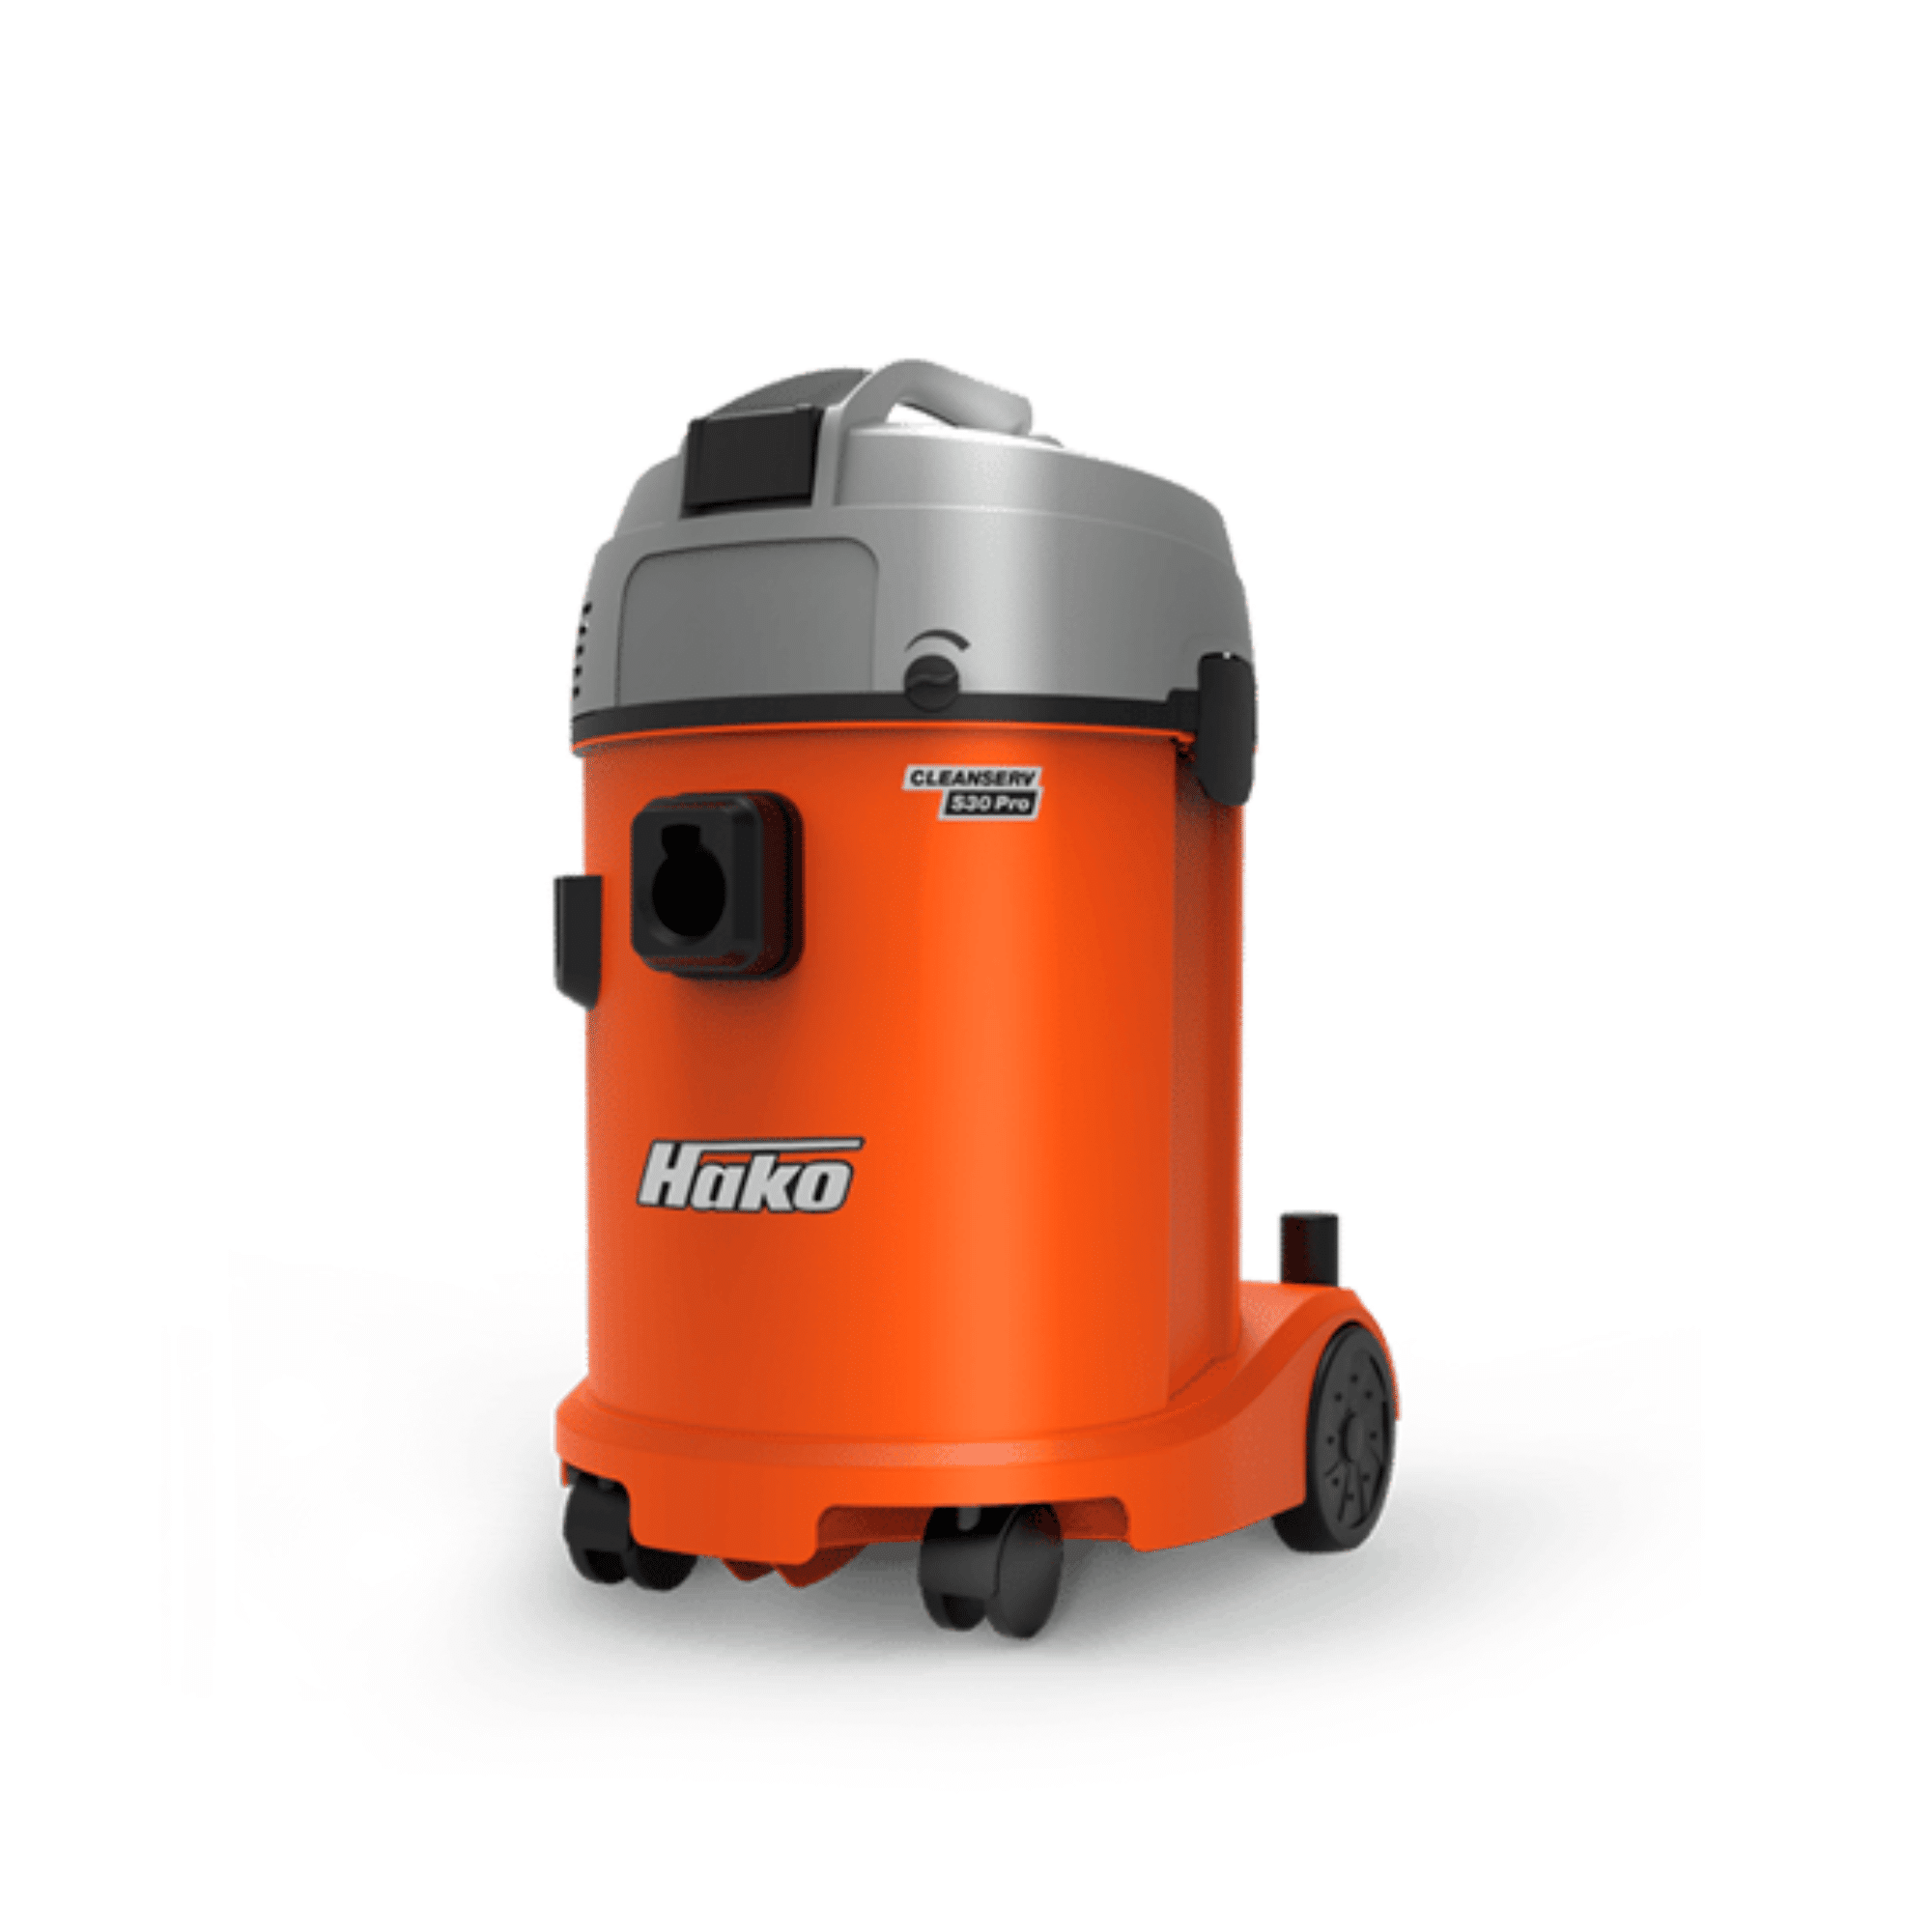 Cleanserv S30 Pro Wet/Dry Vacuum Cleaner – HEPA13